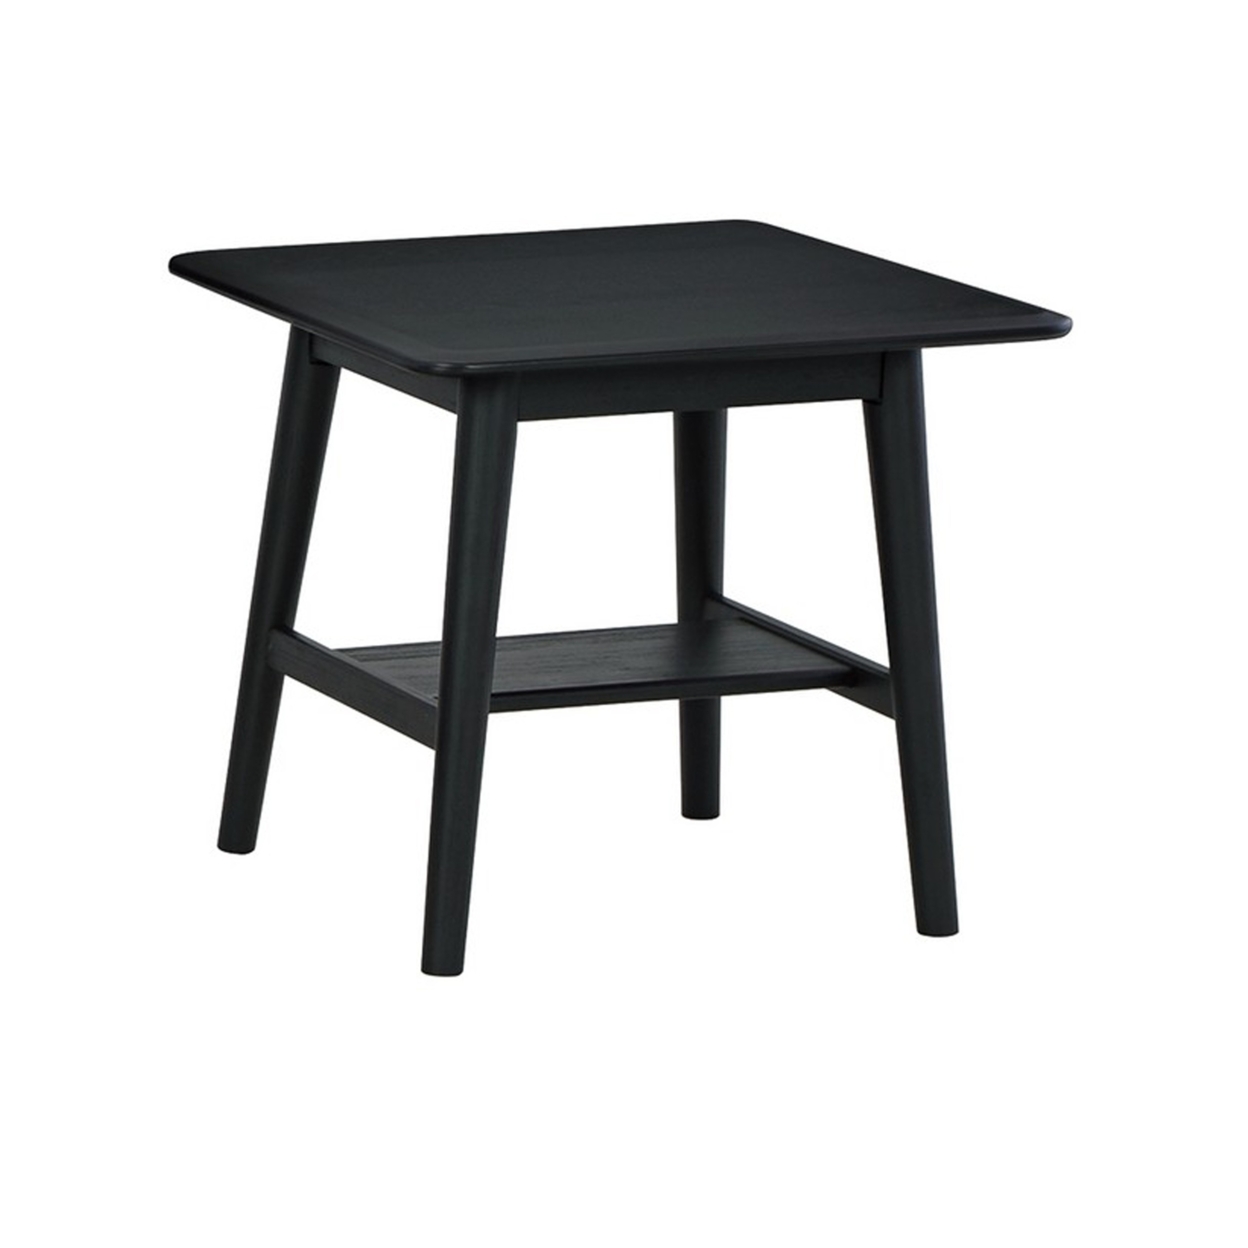 Edan 3 Piece Coffee And End Table Set With Shelves, Metal And Wood, Black- Saltoro Sherpi